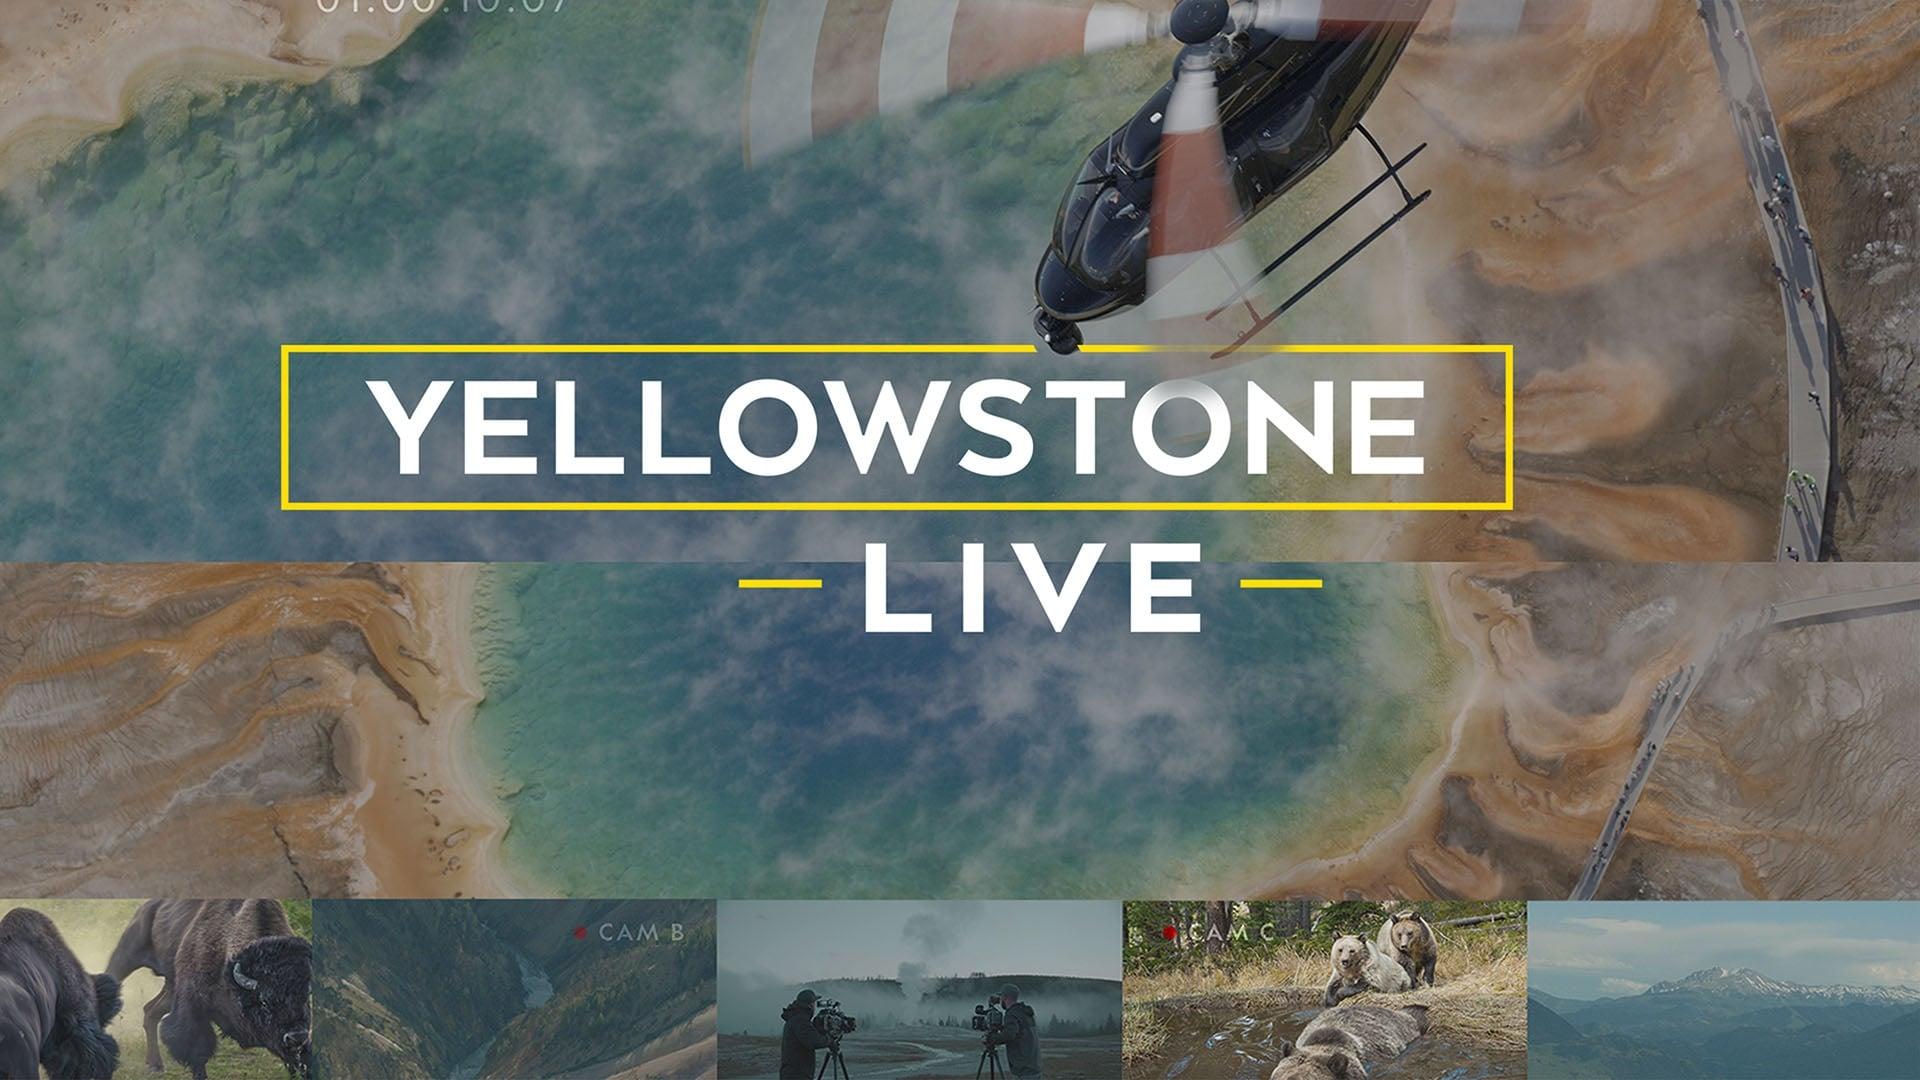 Yellowstone Live backdrop